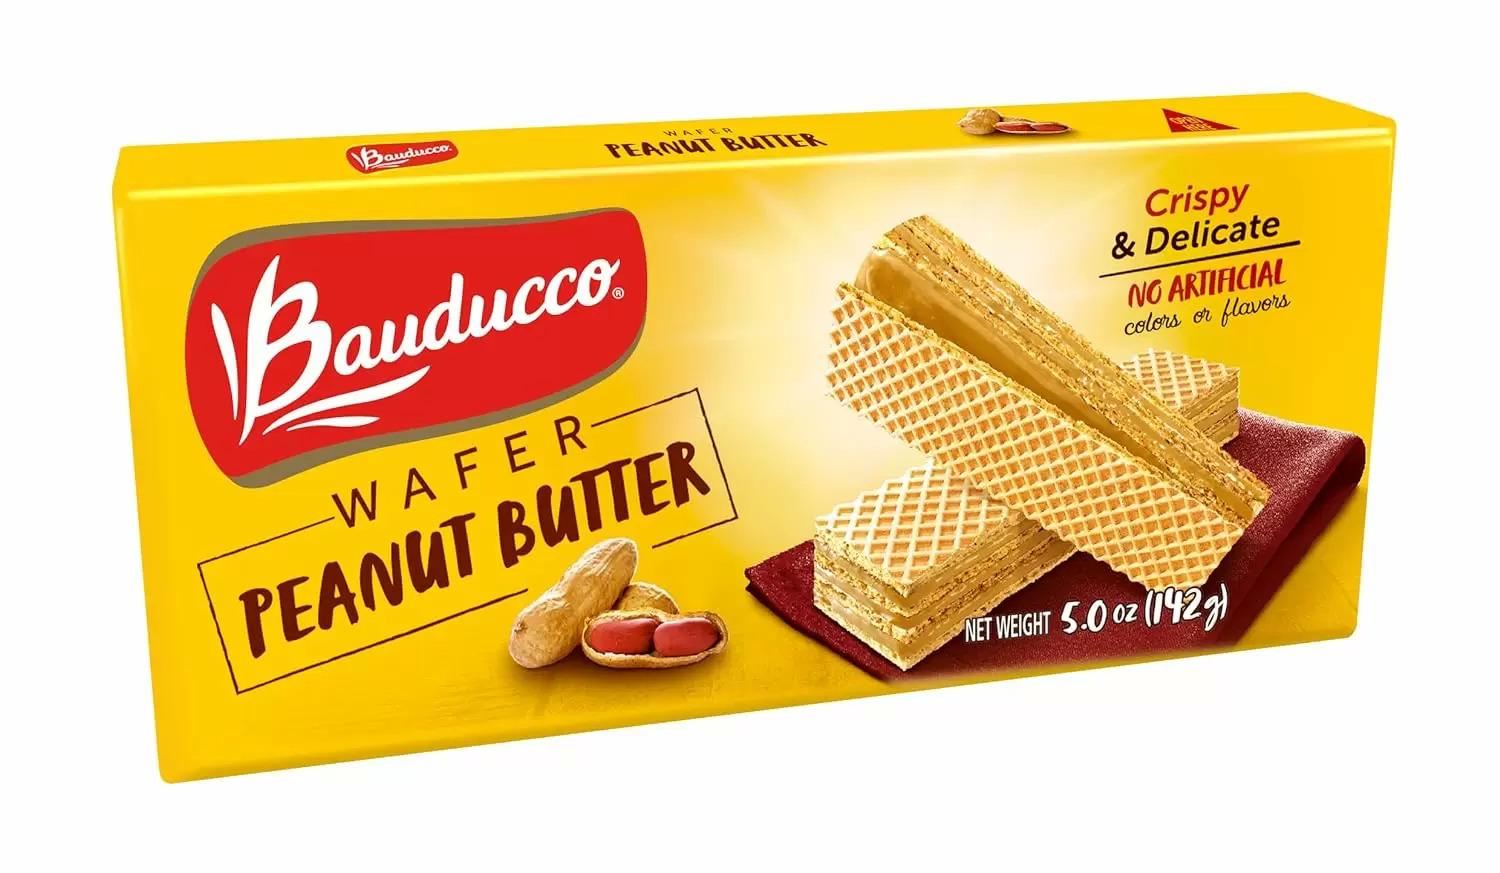 Bauducco Crispy Peanut Butter Wafers for $0.99